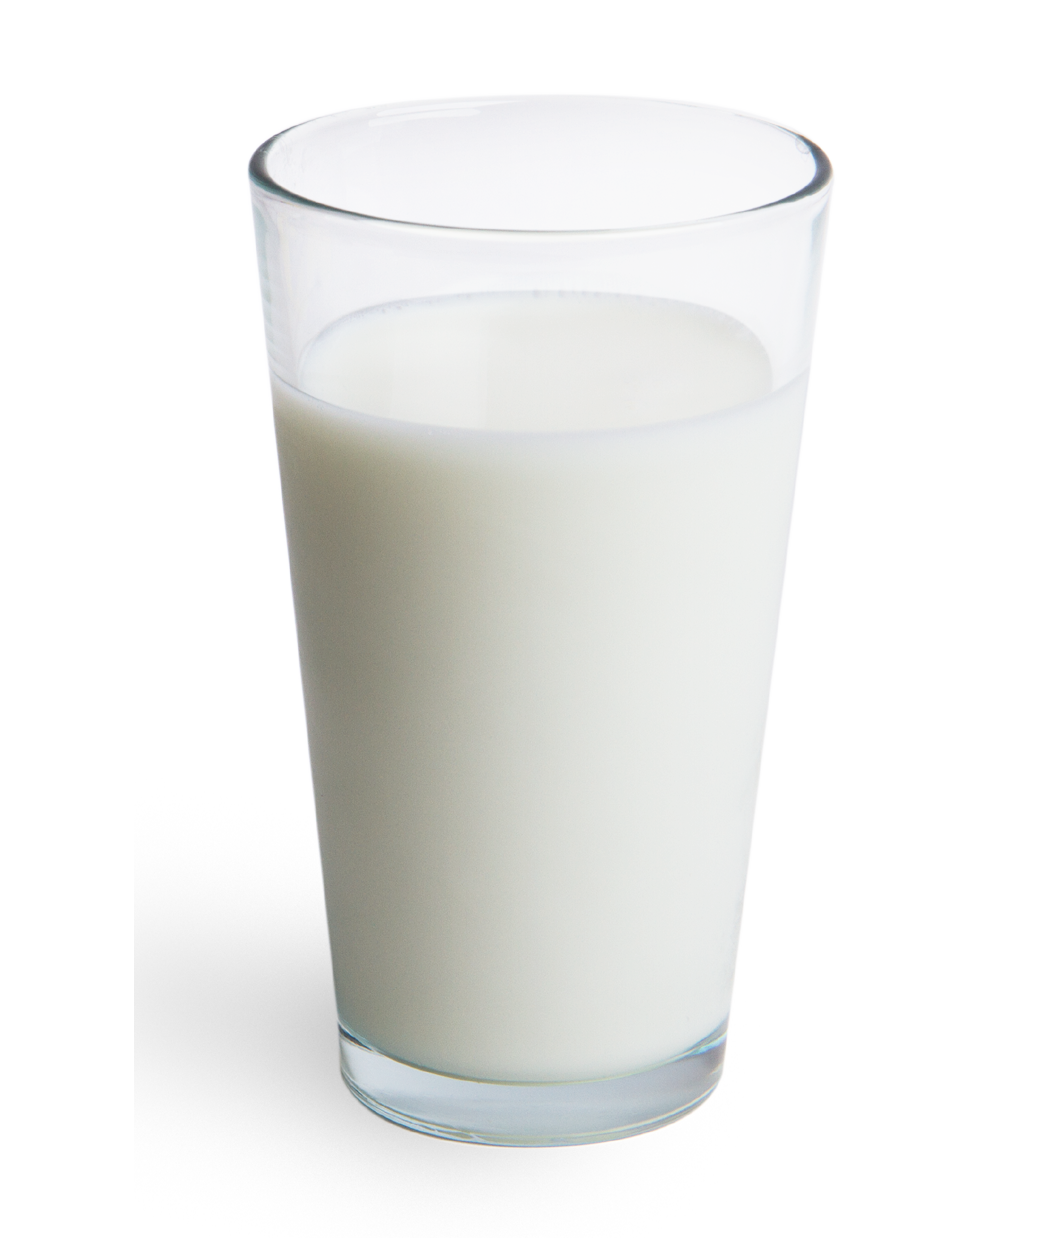 dairy clipart glass milk